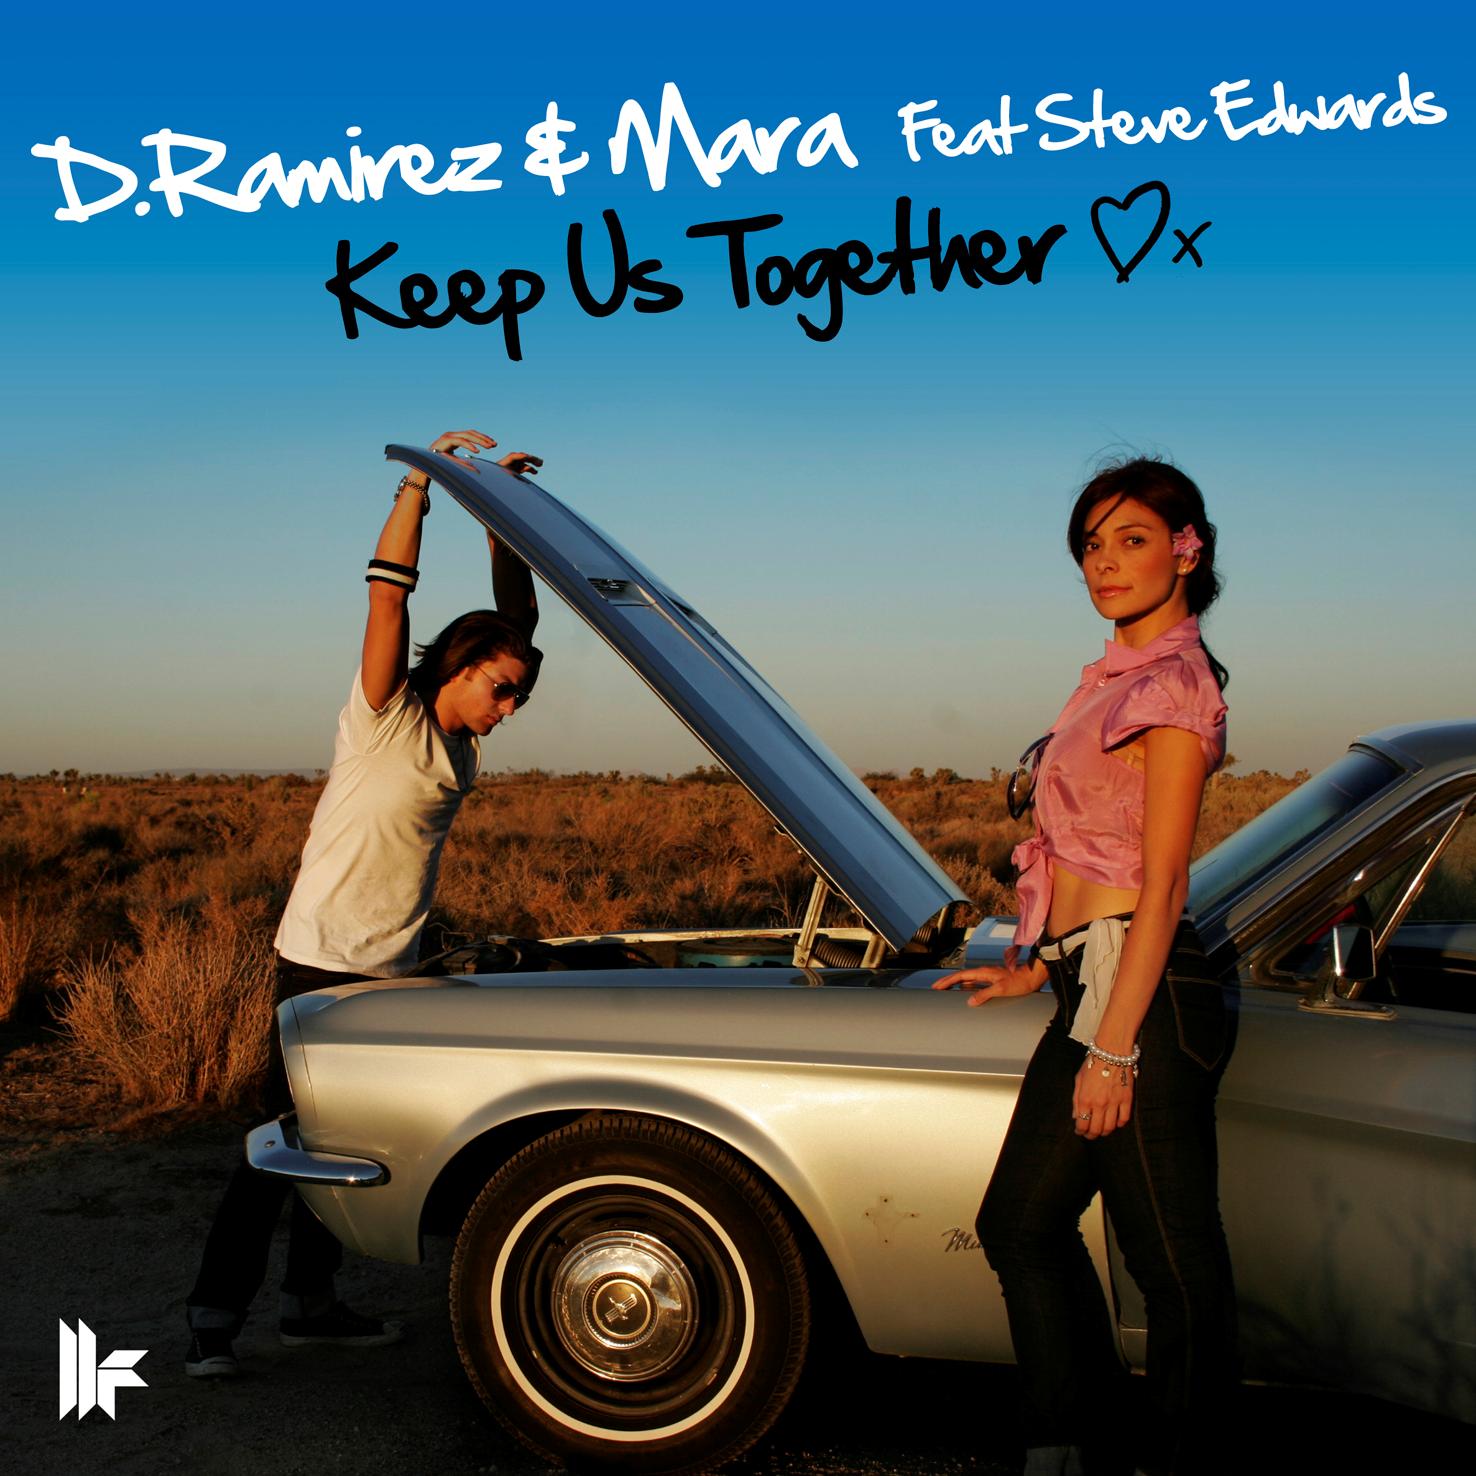 D Ramirez and Mara feat Steve Edwards - Keep us together